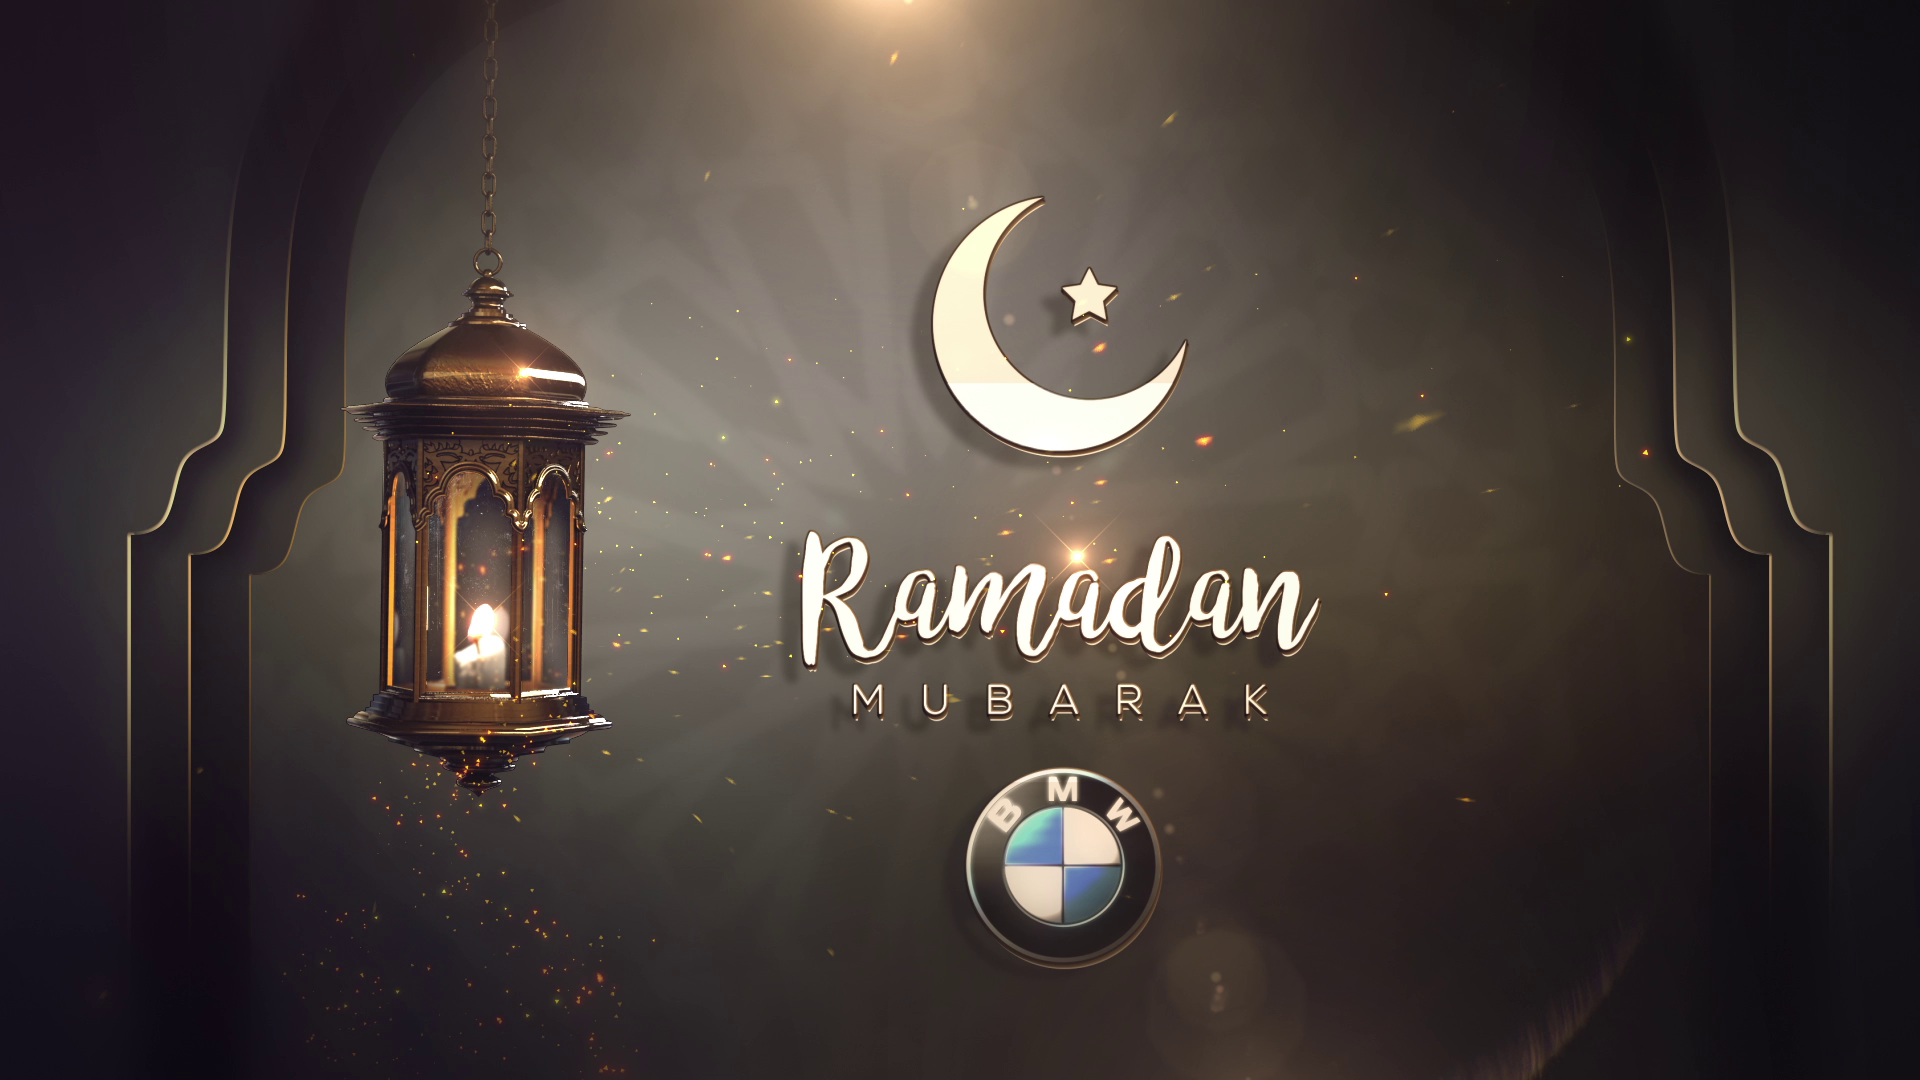 Рамазан мубарак. Рамазан Eid Mubarak. Рамадан 2021 мубарак. Рамадан фон. Фон для рамадана